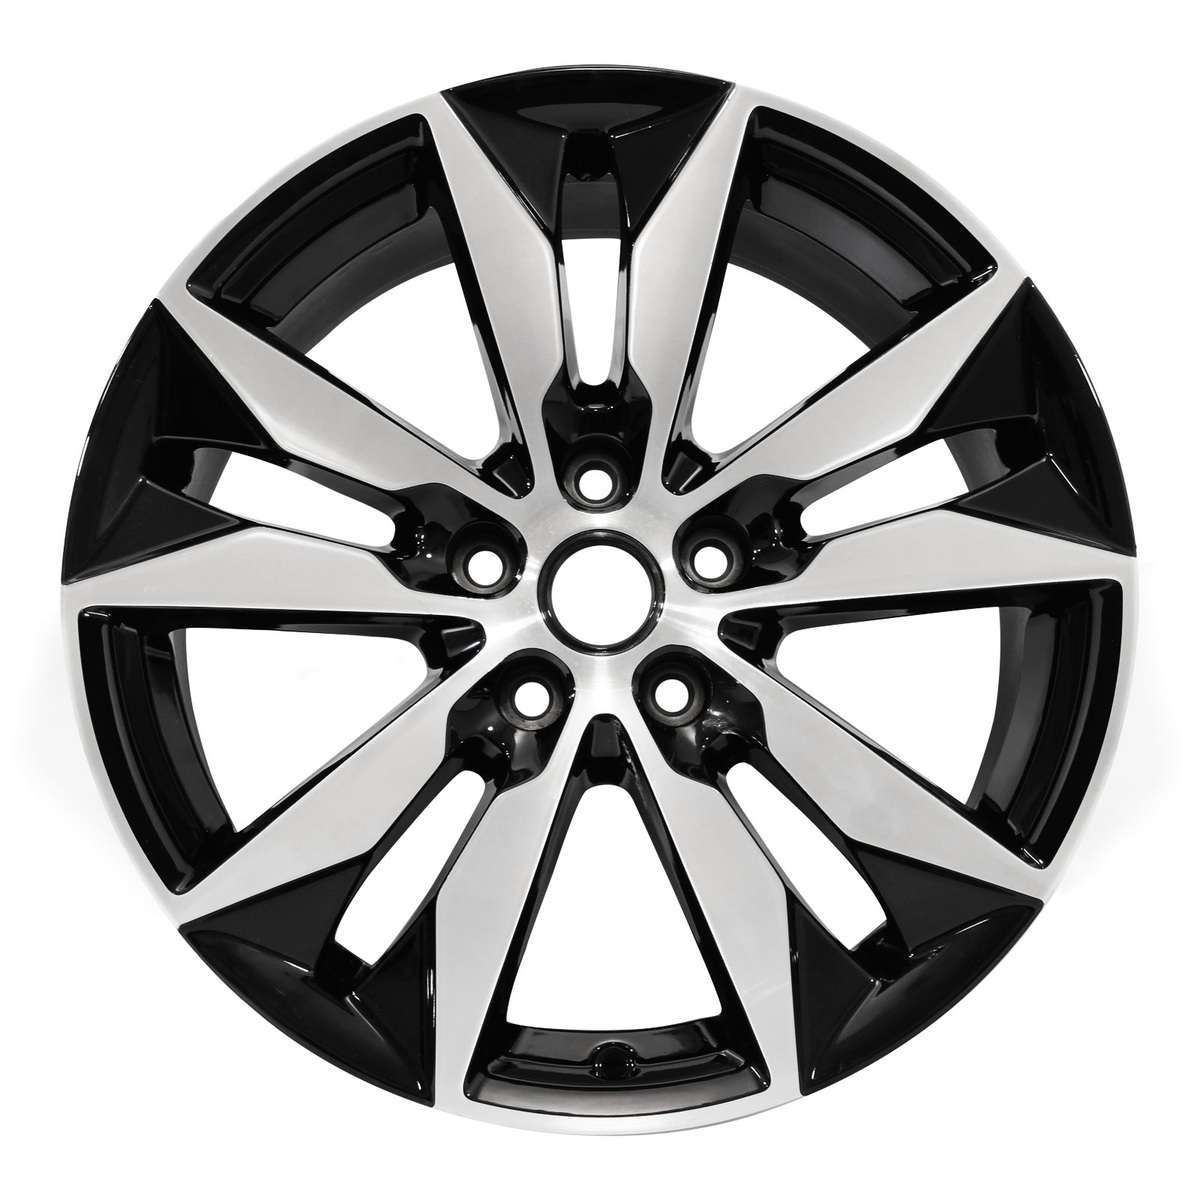 2017 Chevrolet Malibu New 18" Replacement Wheel Rim RW5716MB